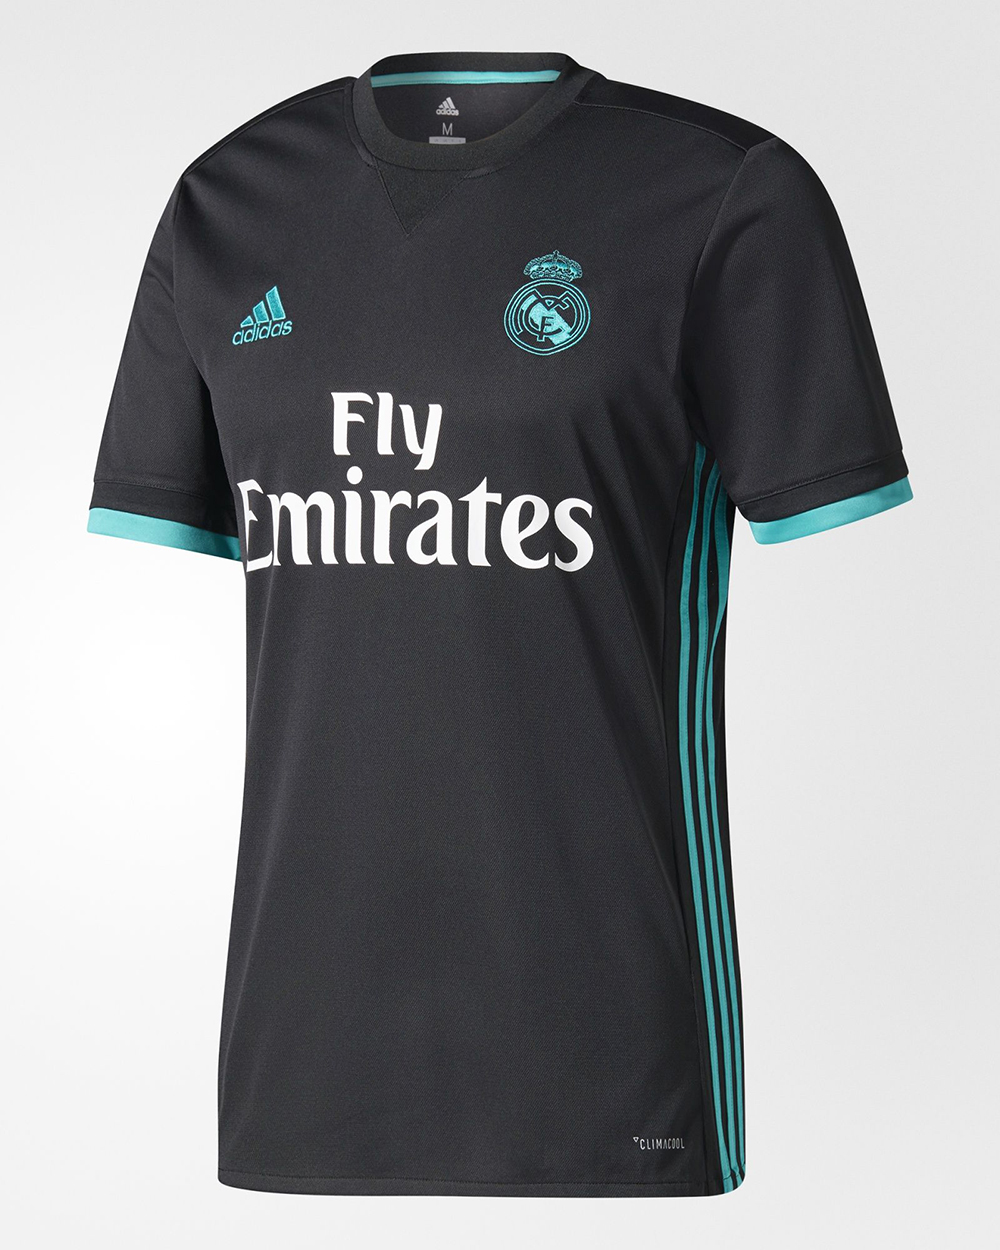 Camiseta alternativa adidas del Real Madrid 2017 18